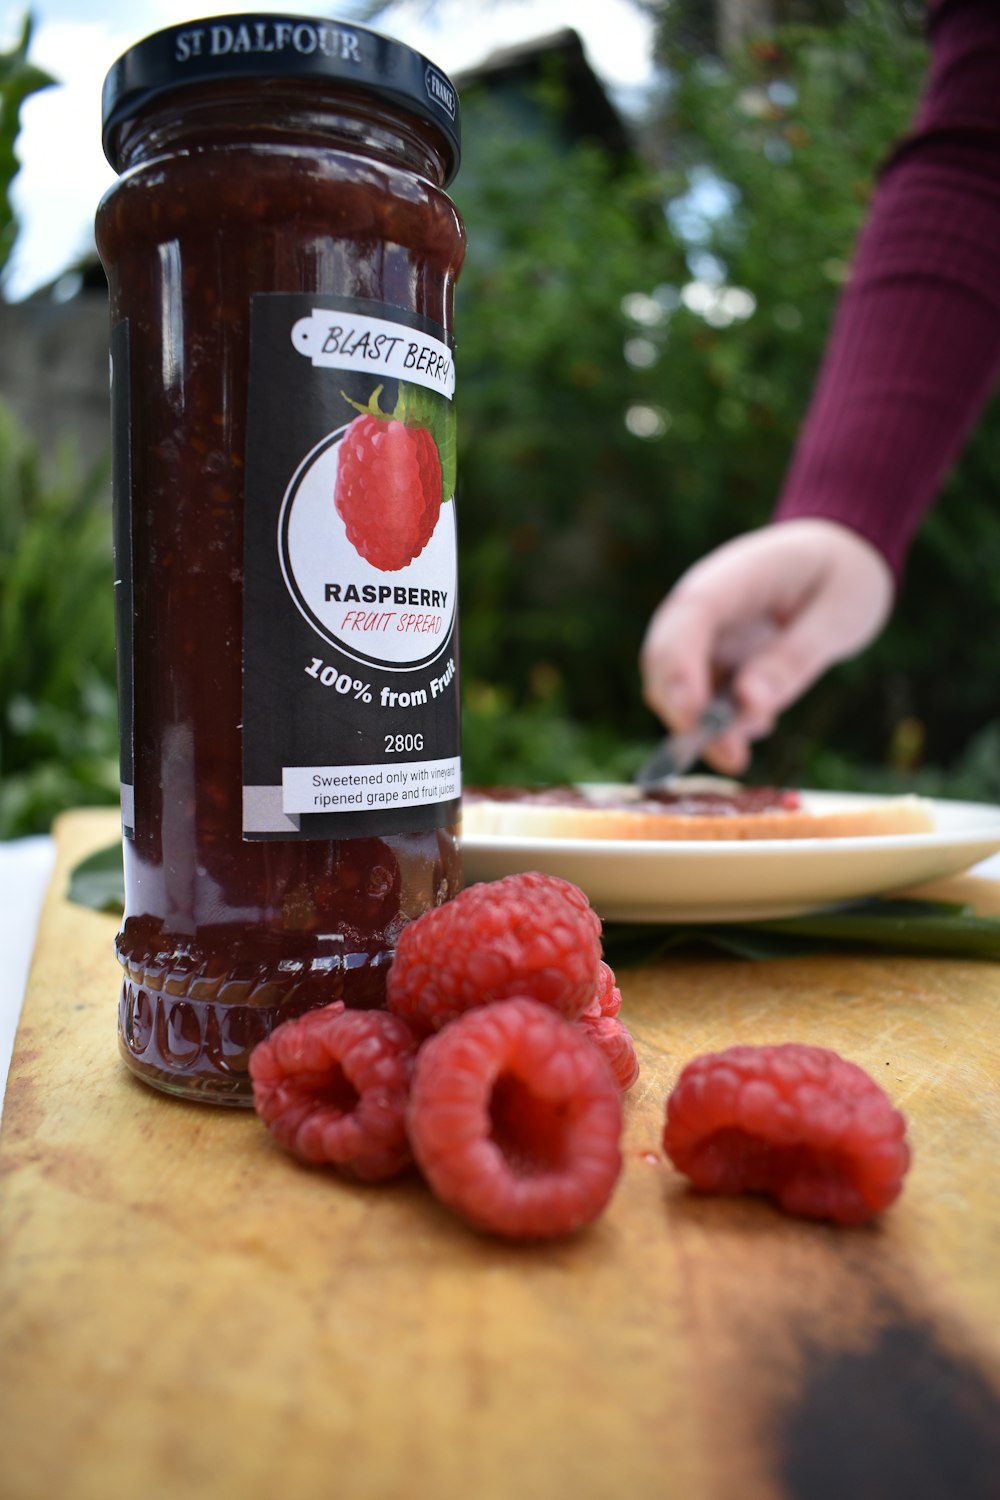 a jar of raspberry jam on a table with raspberries